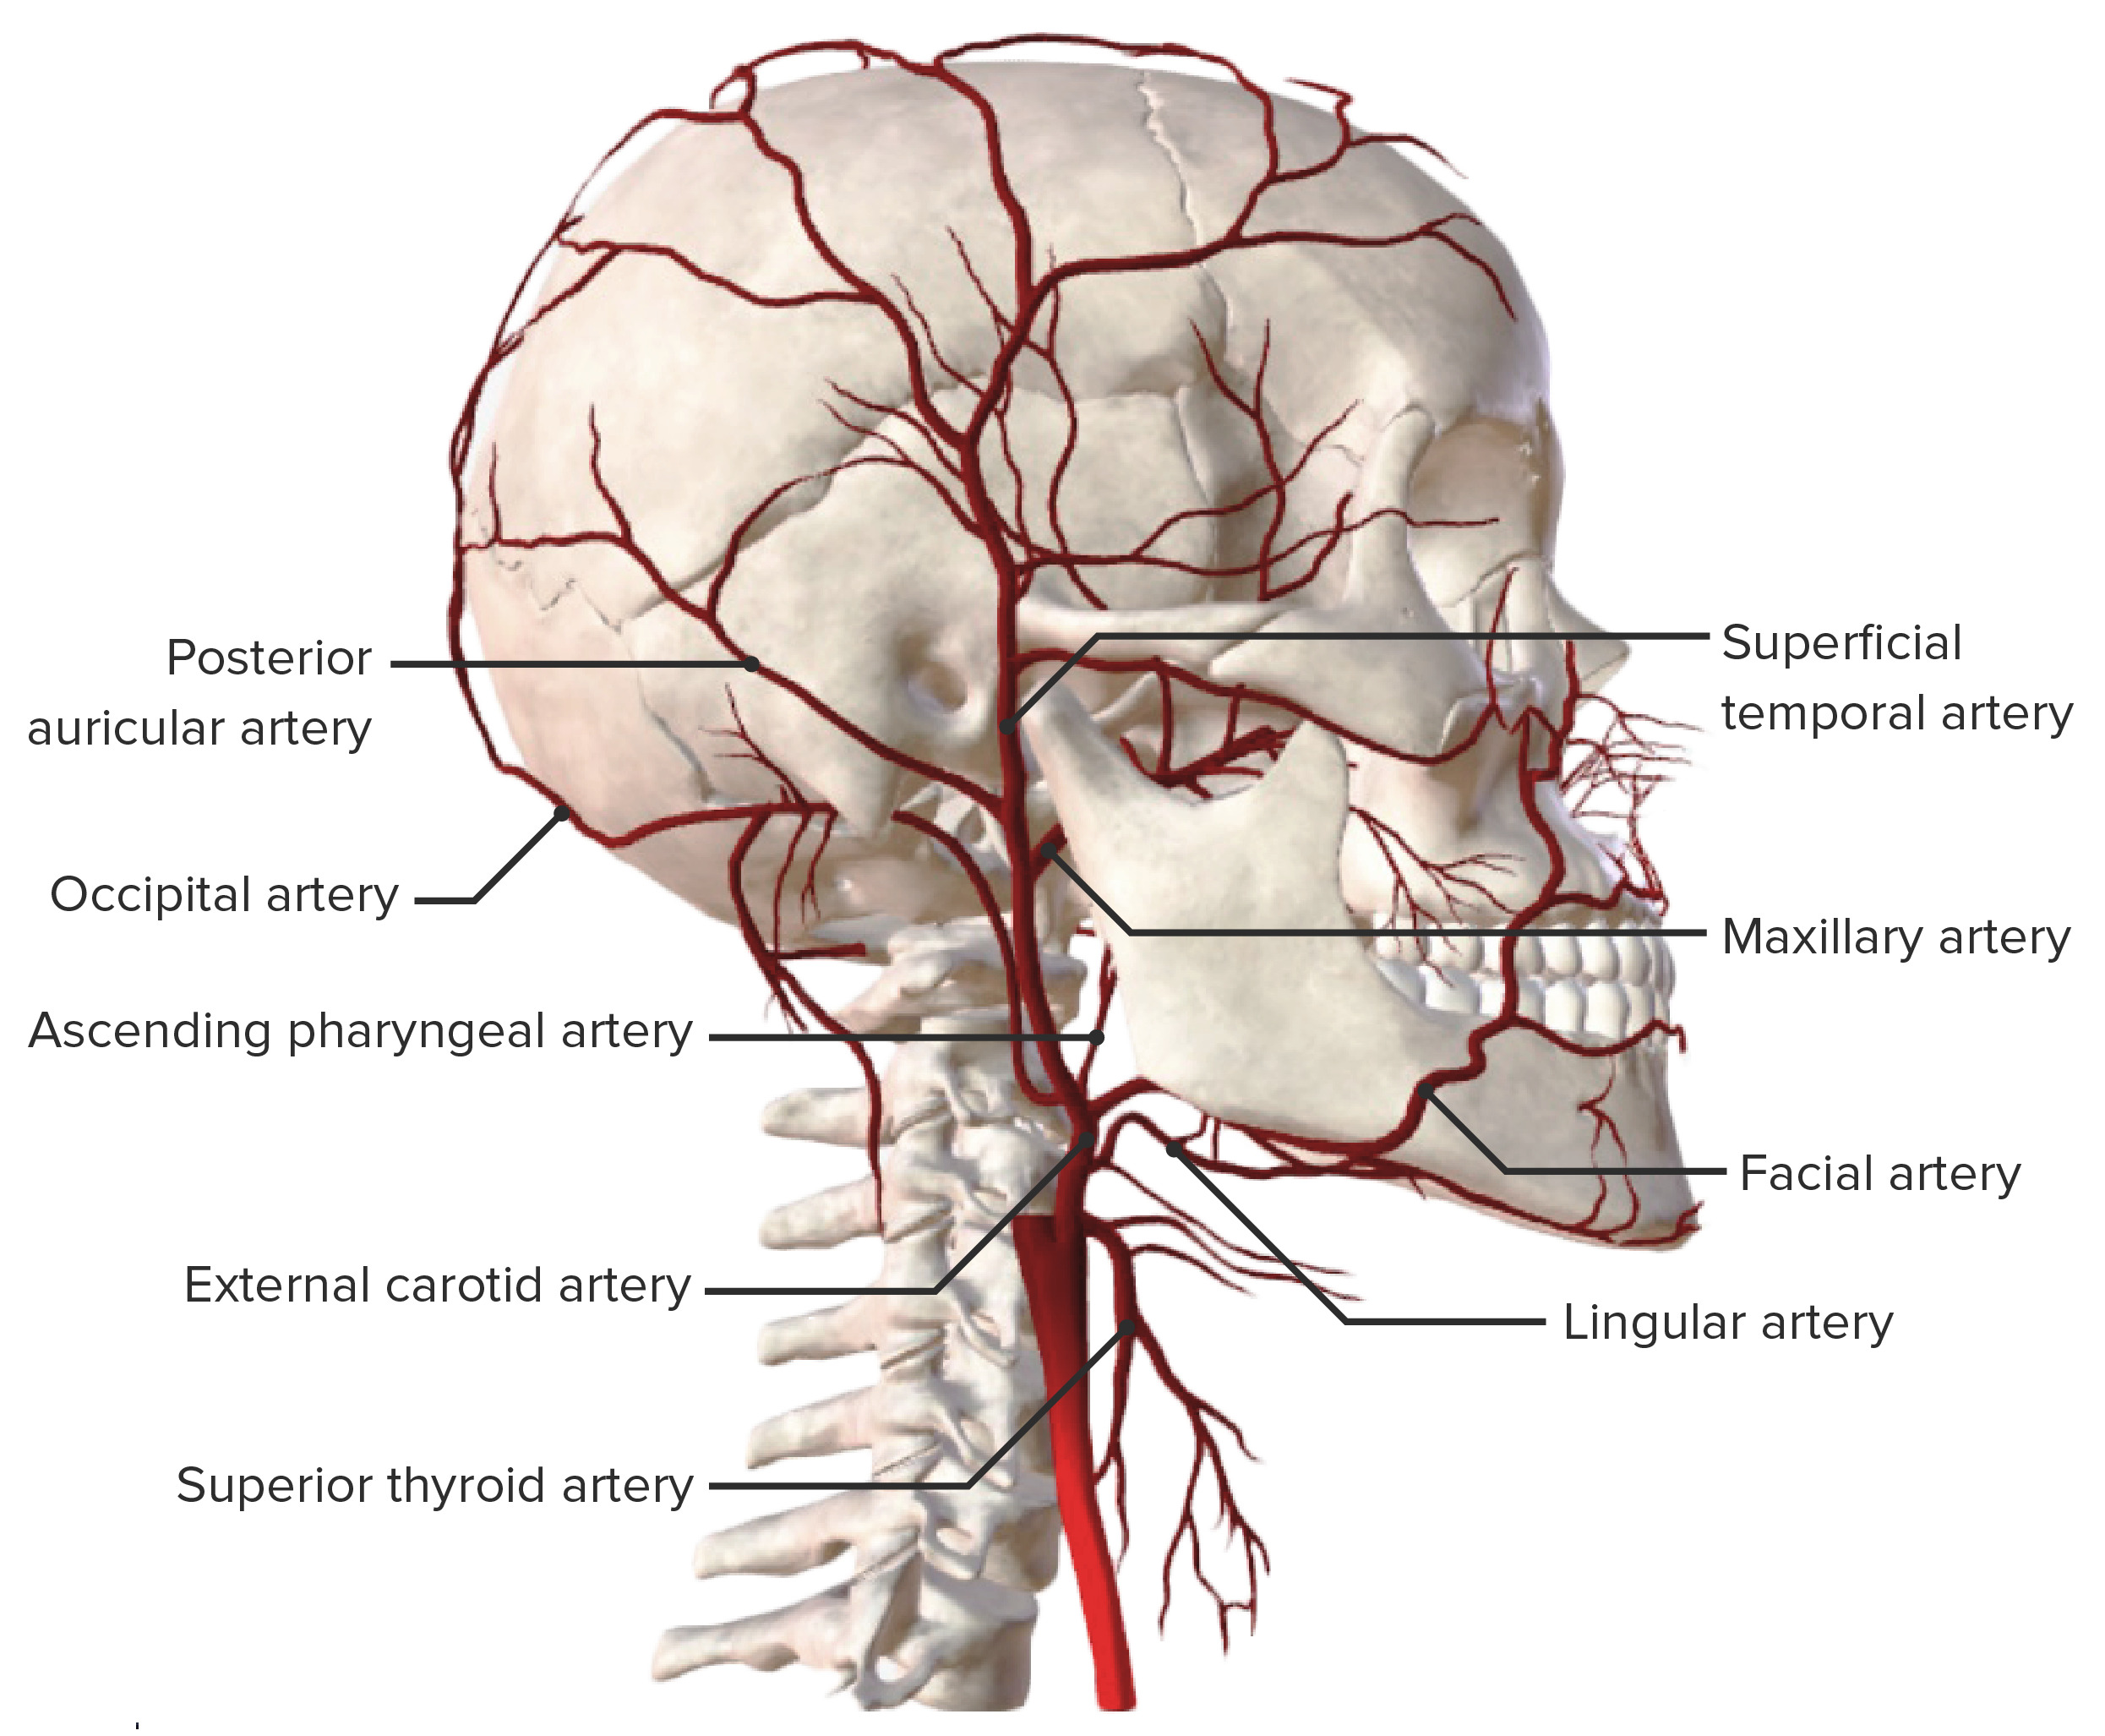 Major branches of the external carotid artery